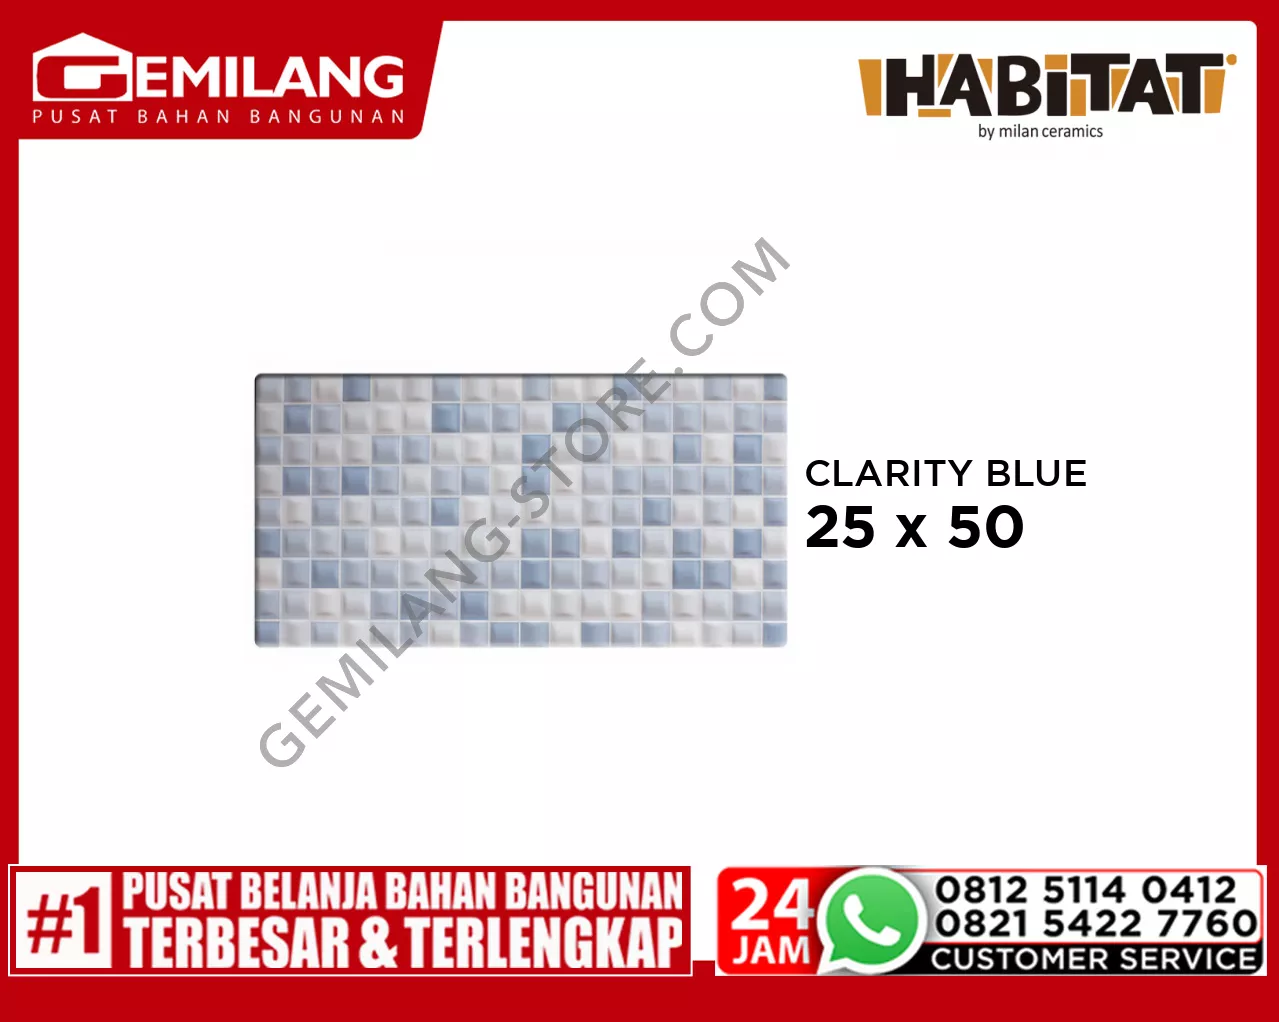 HABITAT CLARITY BLUE 25 x 50